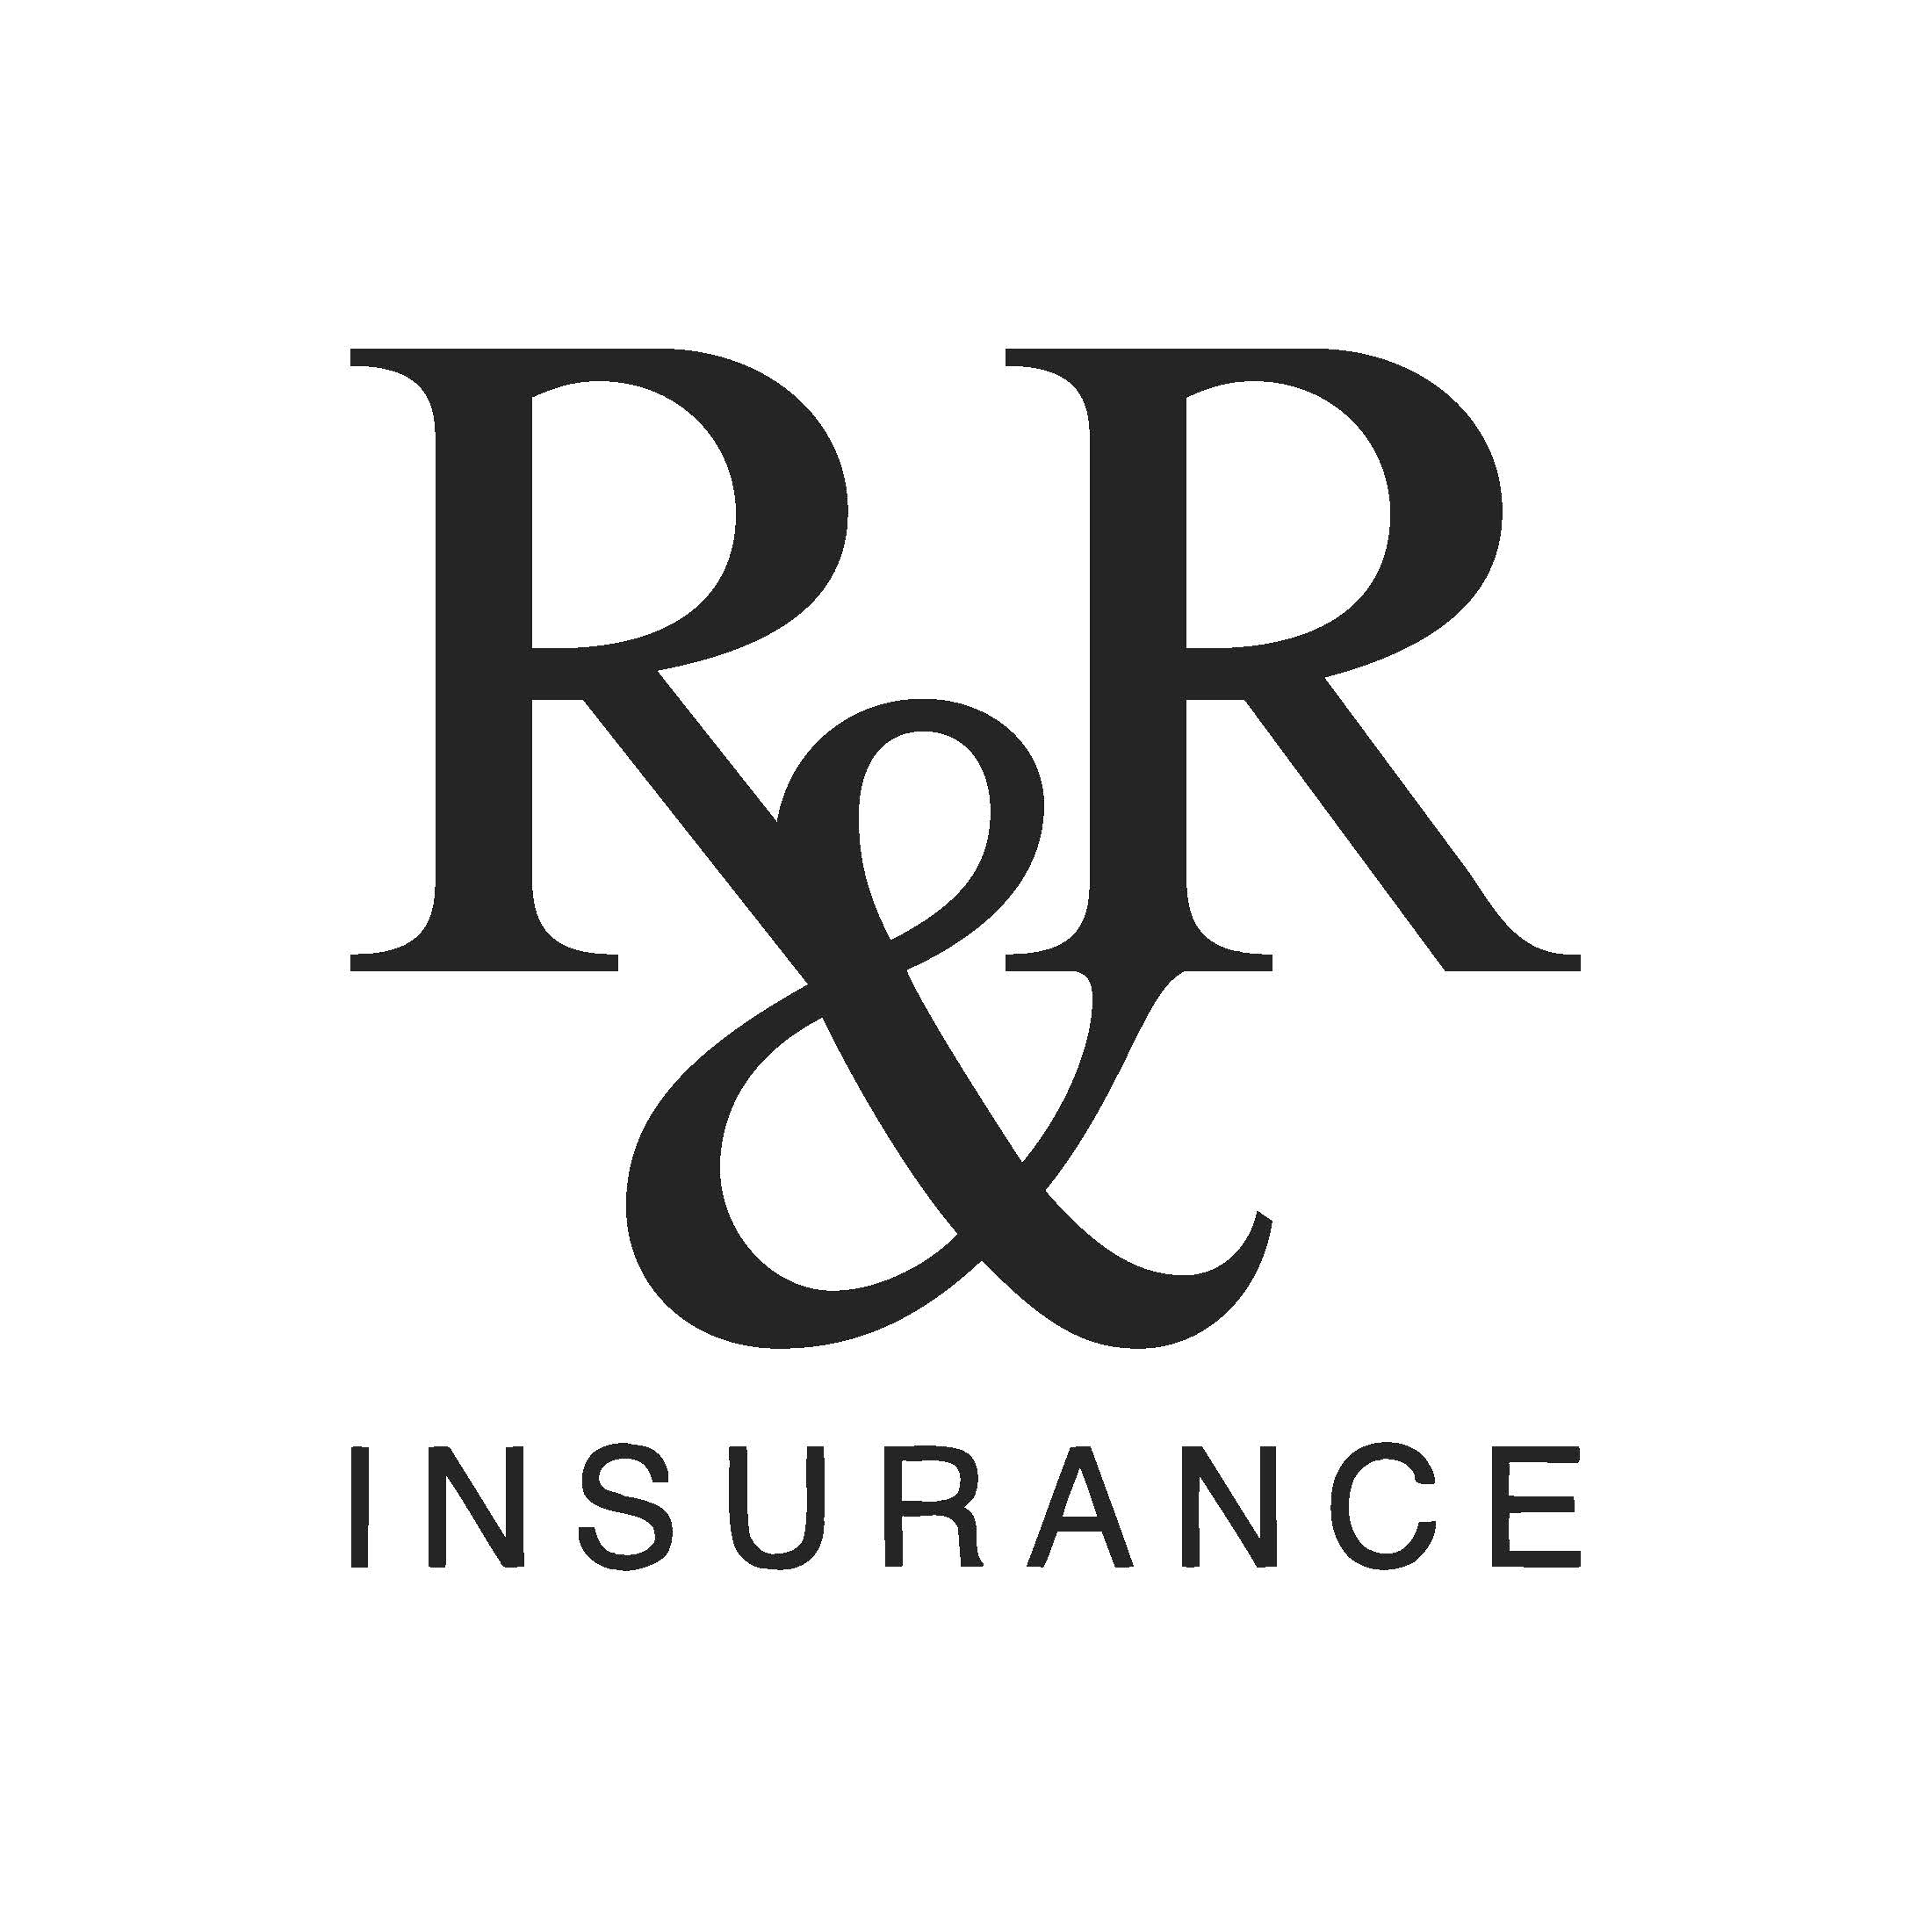 G-R&R Insurance